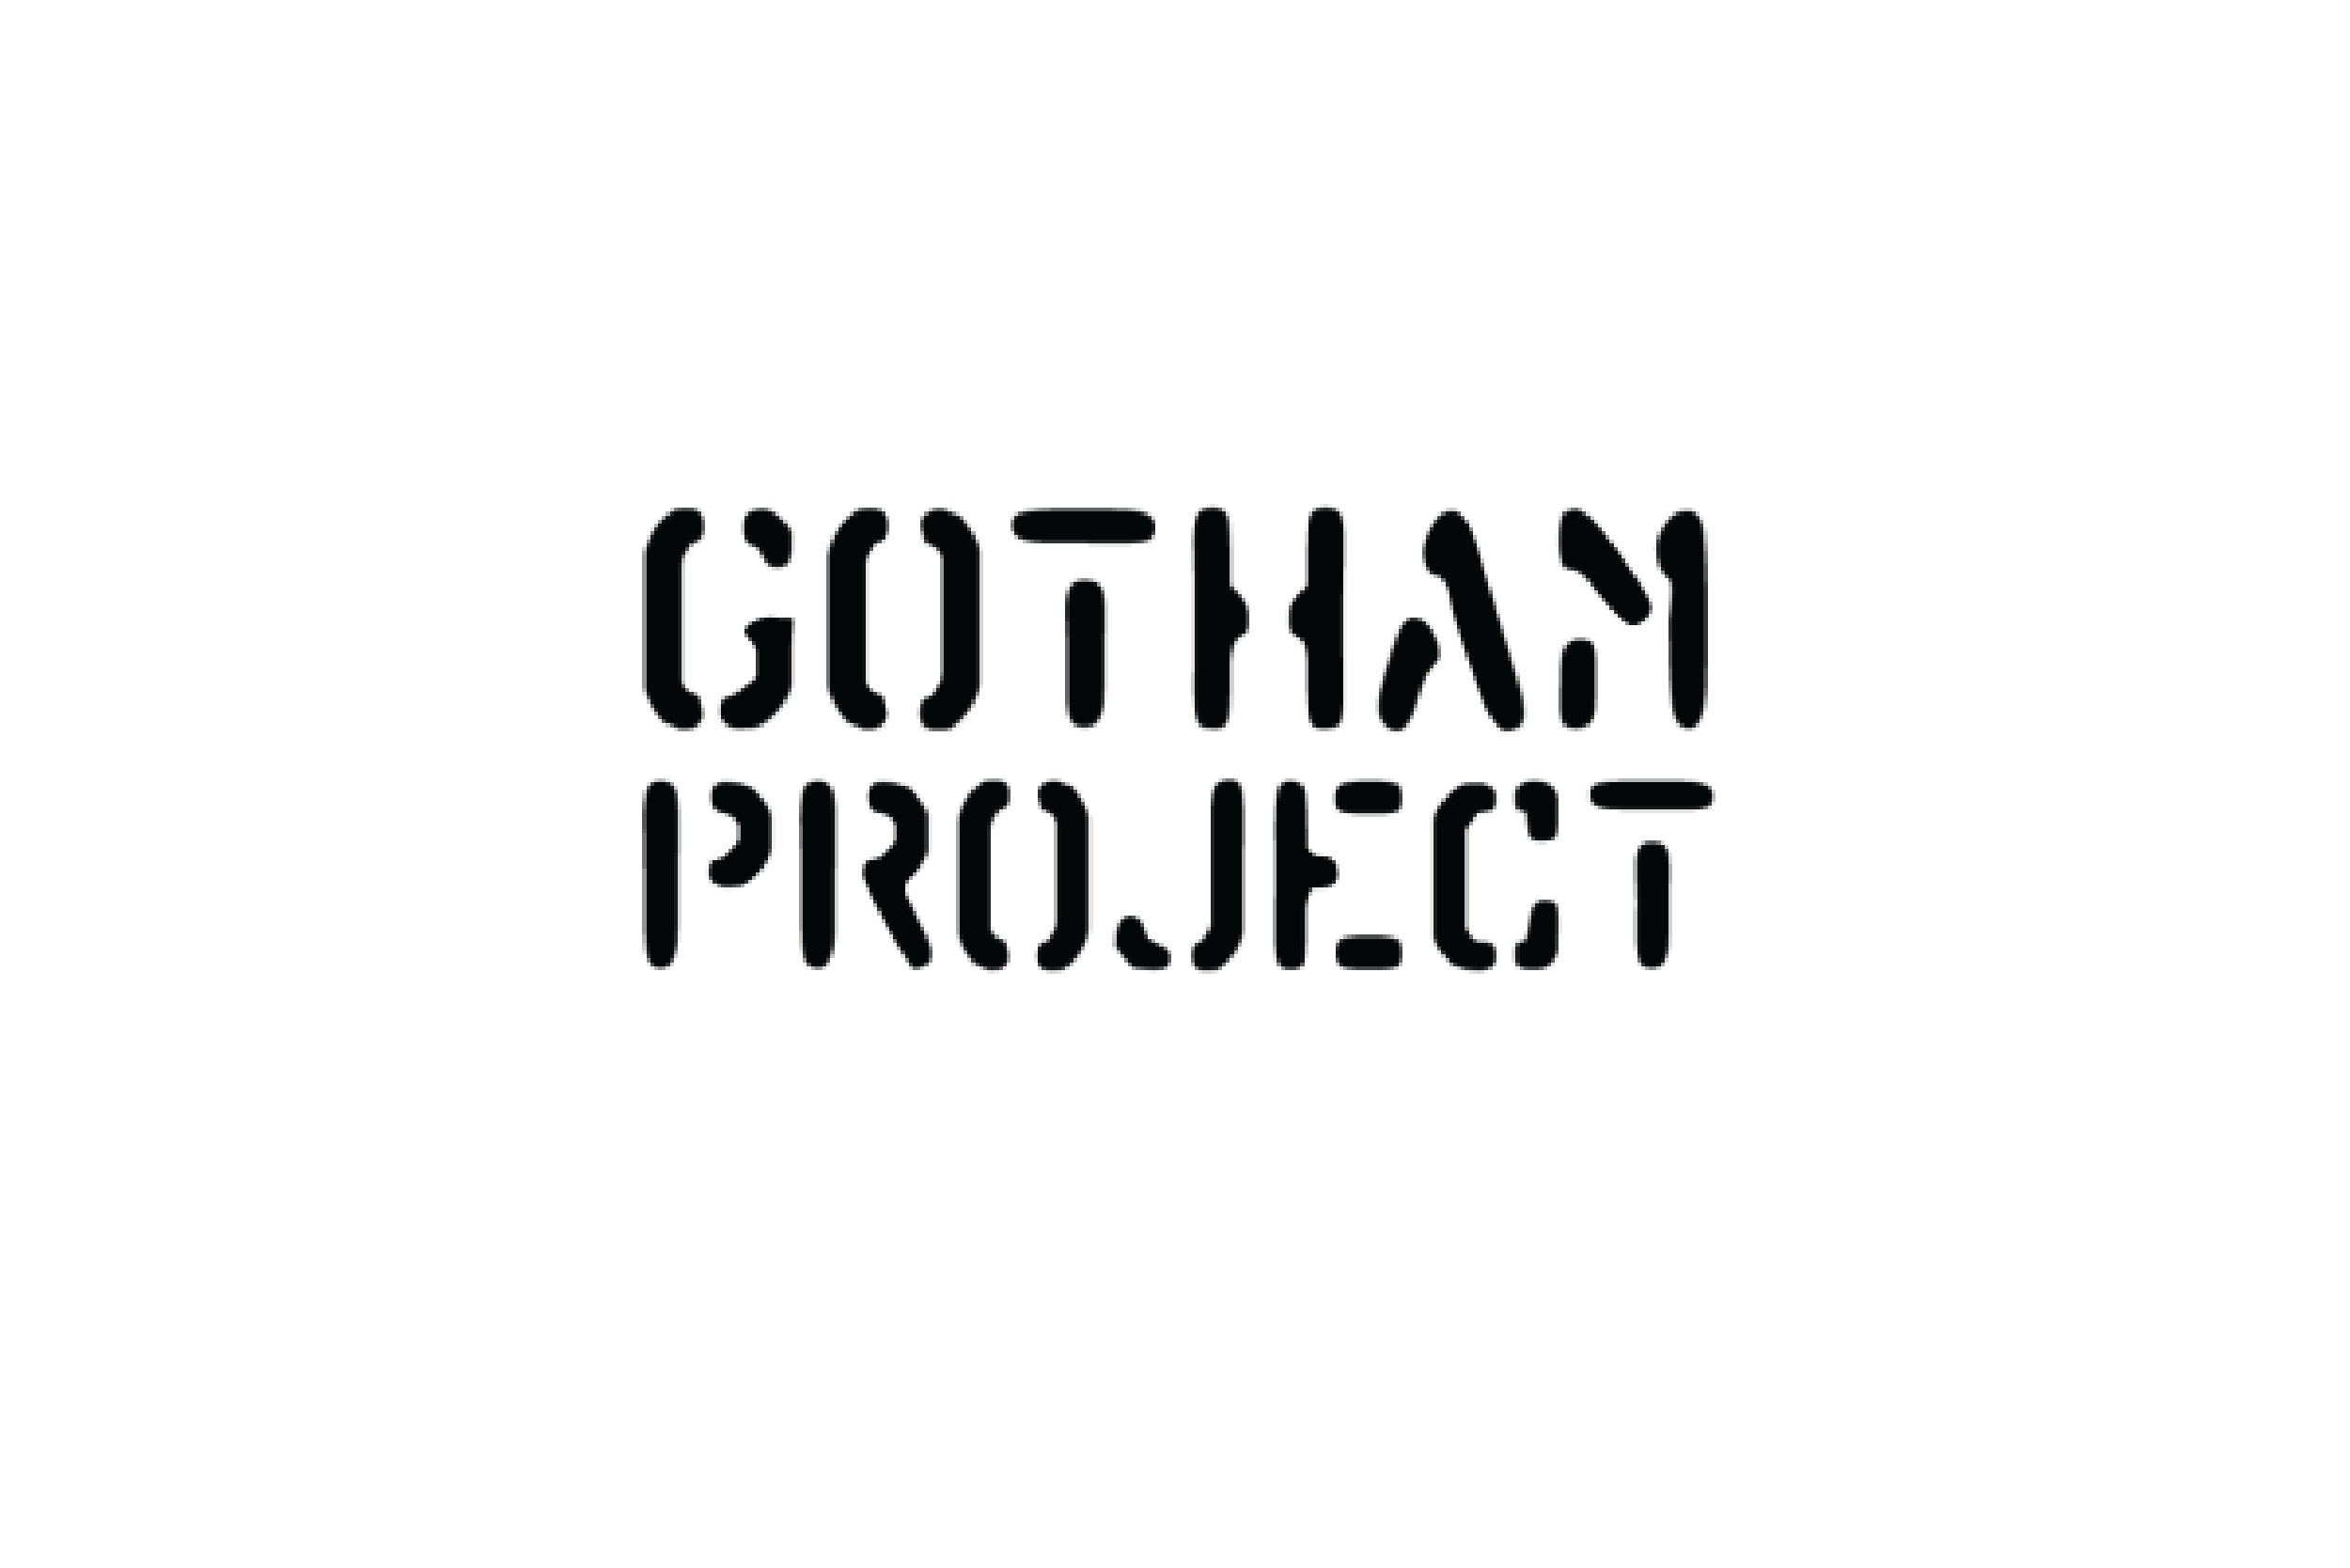 Gotham wine project logo-01.png